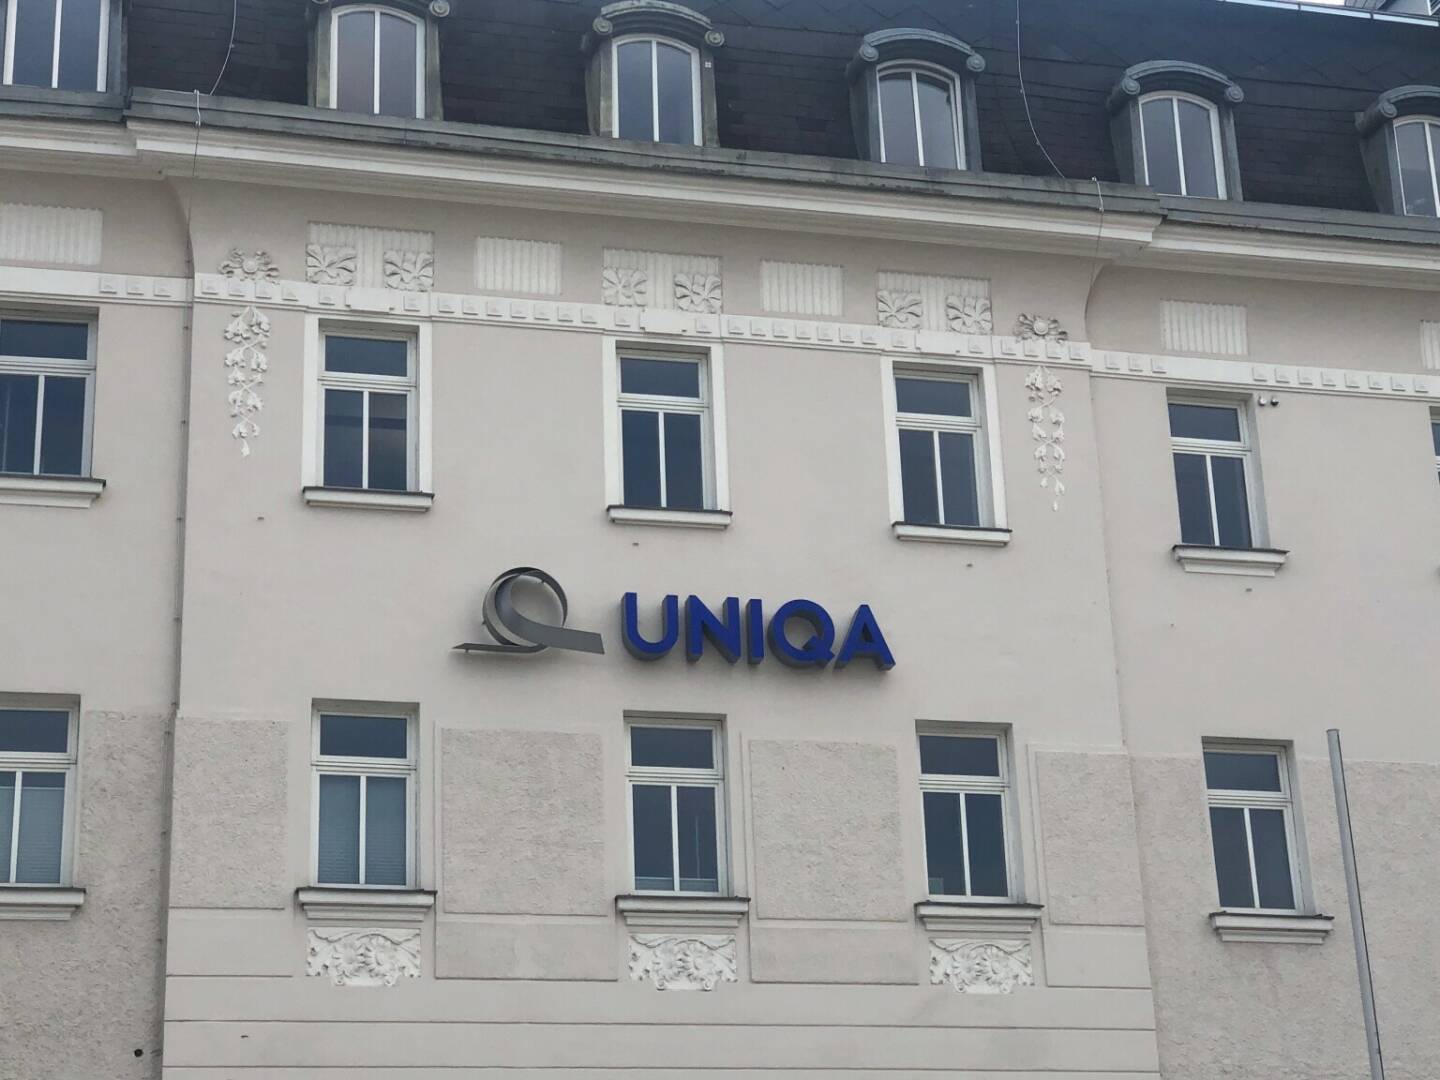 Uniqa, Klagenfurt, Kärnten, Credit: BSM